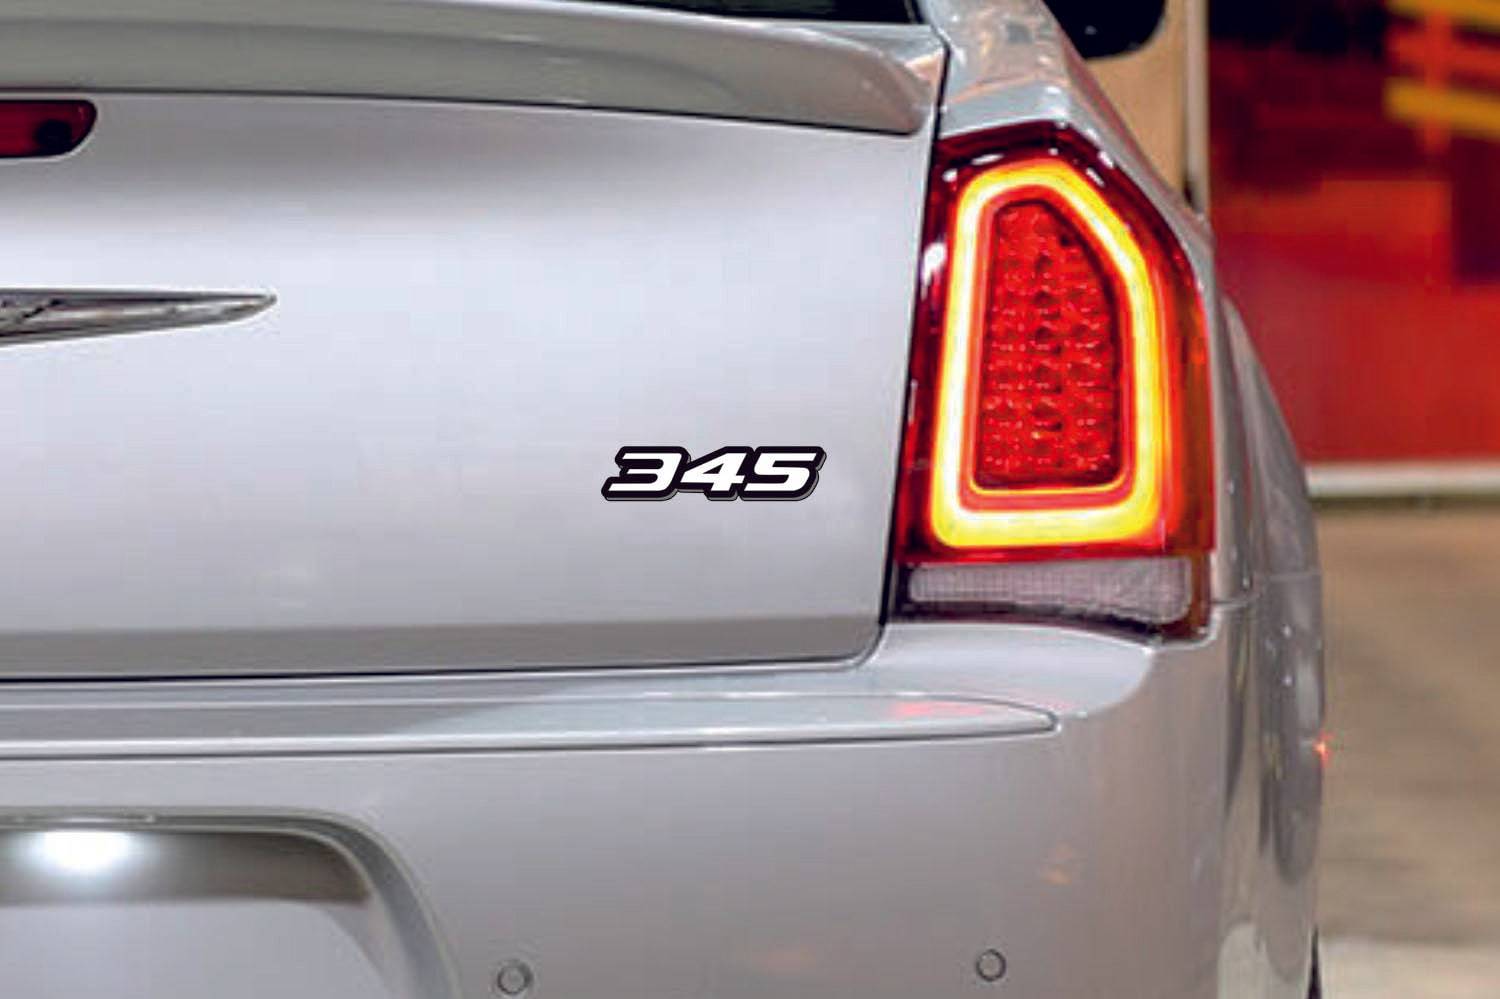 Dodge tailgate trunk rear emblem with 345 logo